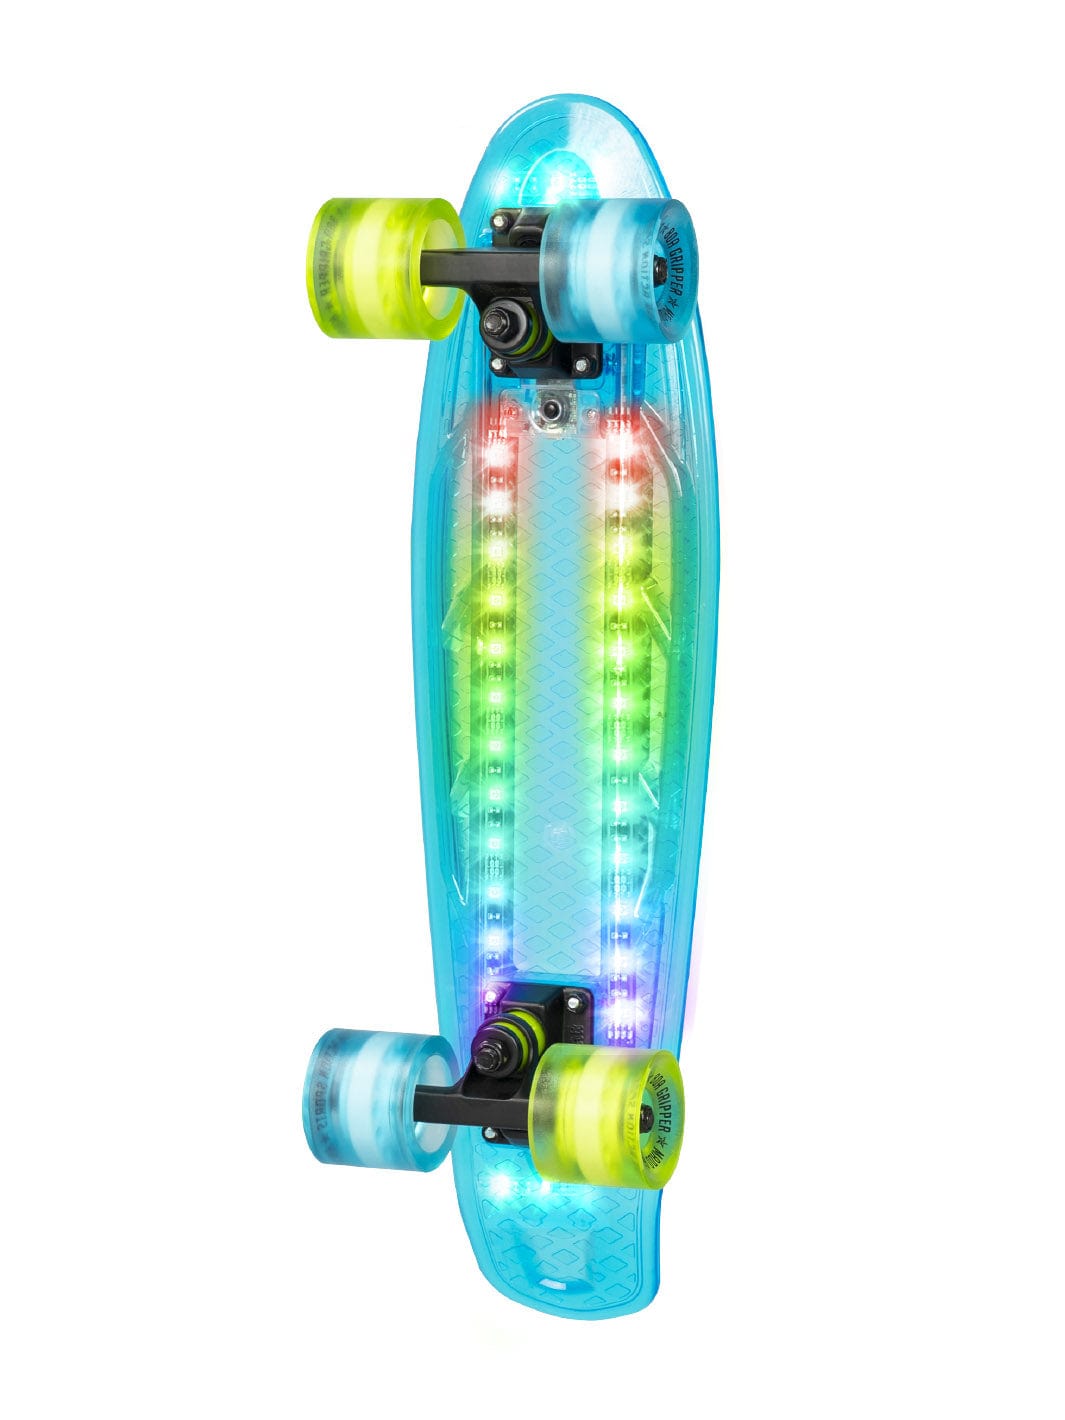 Madd Gear Kids Skateboard Penny Australia Deck Complete Skateboard Blue Flashing LED Lights